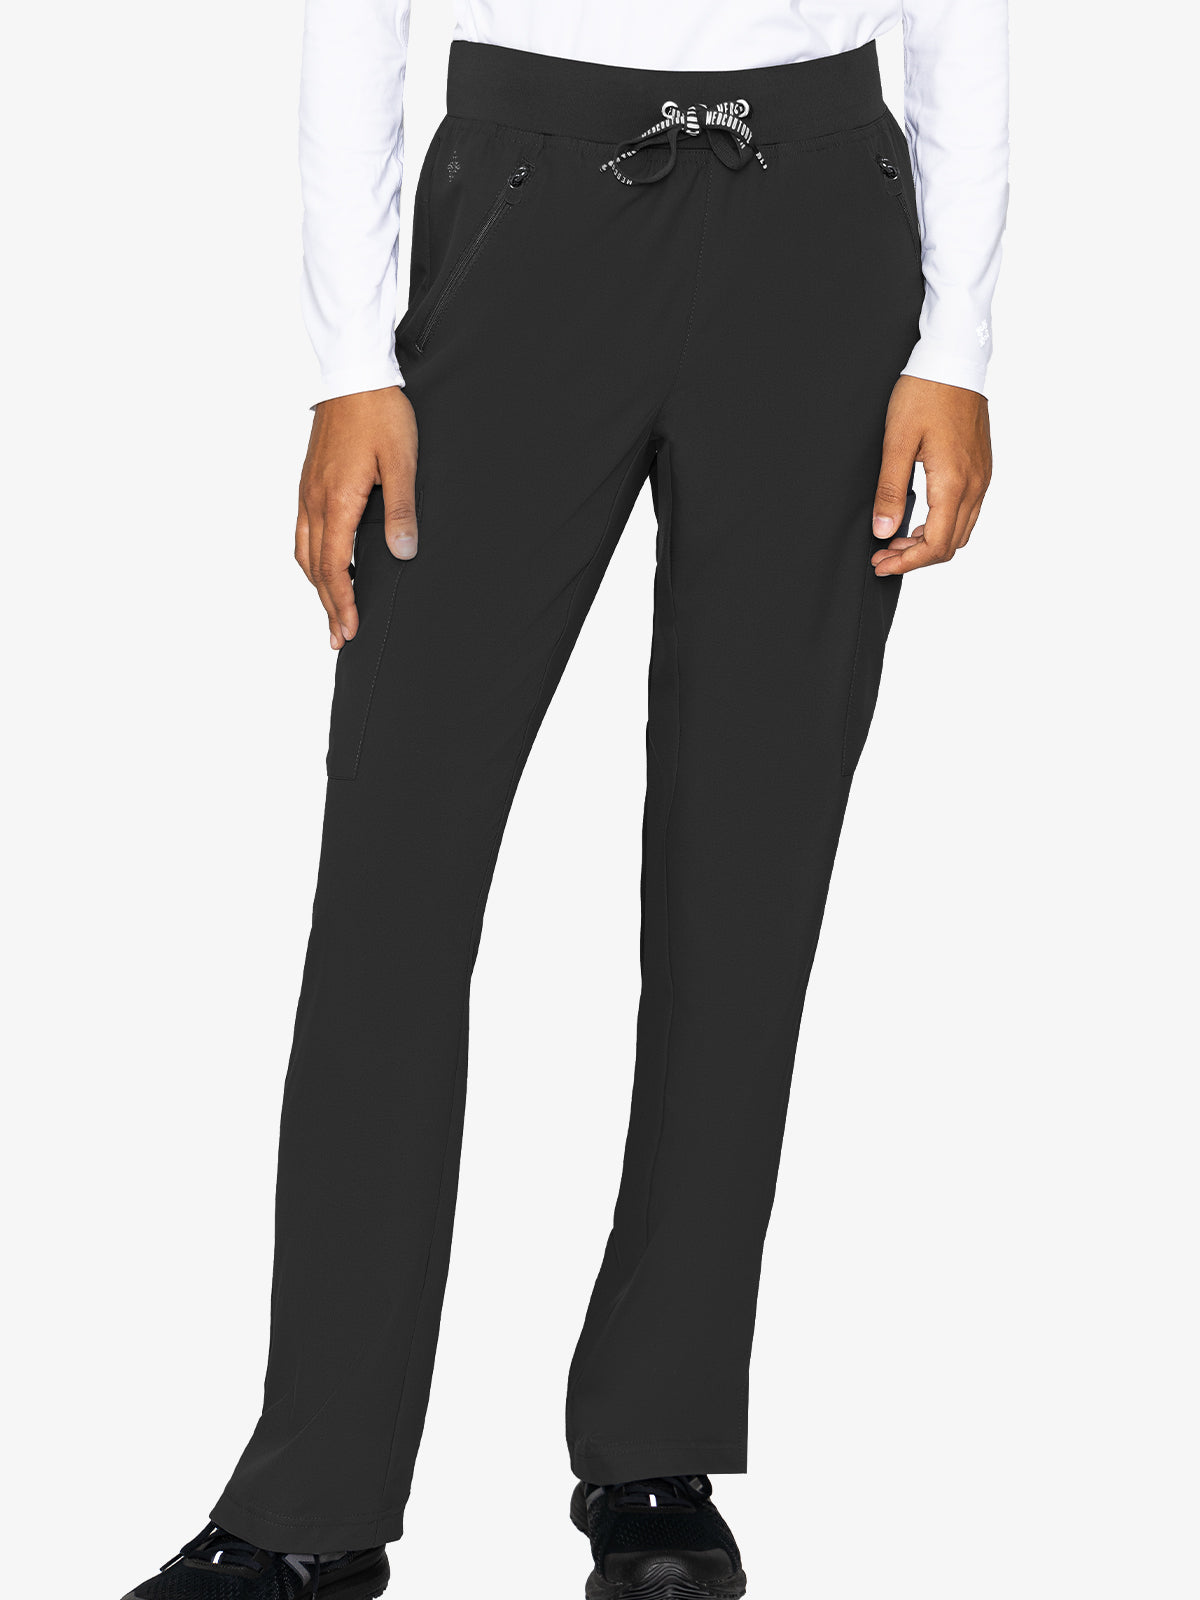 Med Couture 2702 Insight Women's Zipper Pocket Pant Black